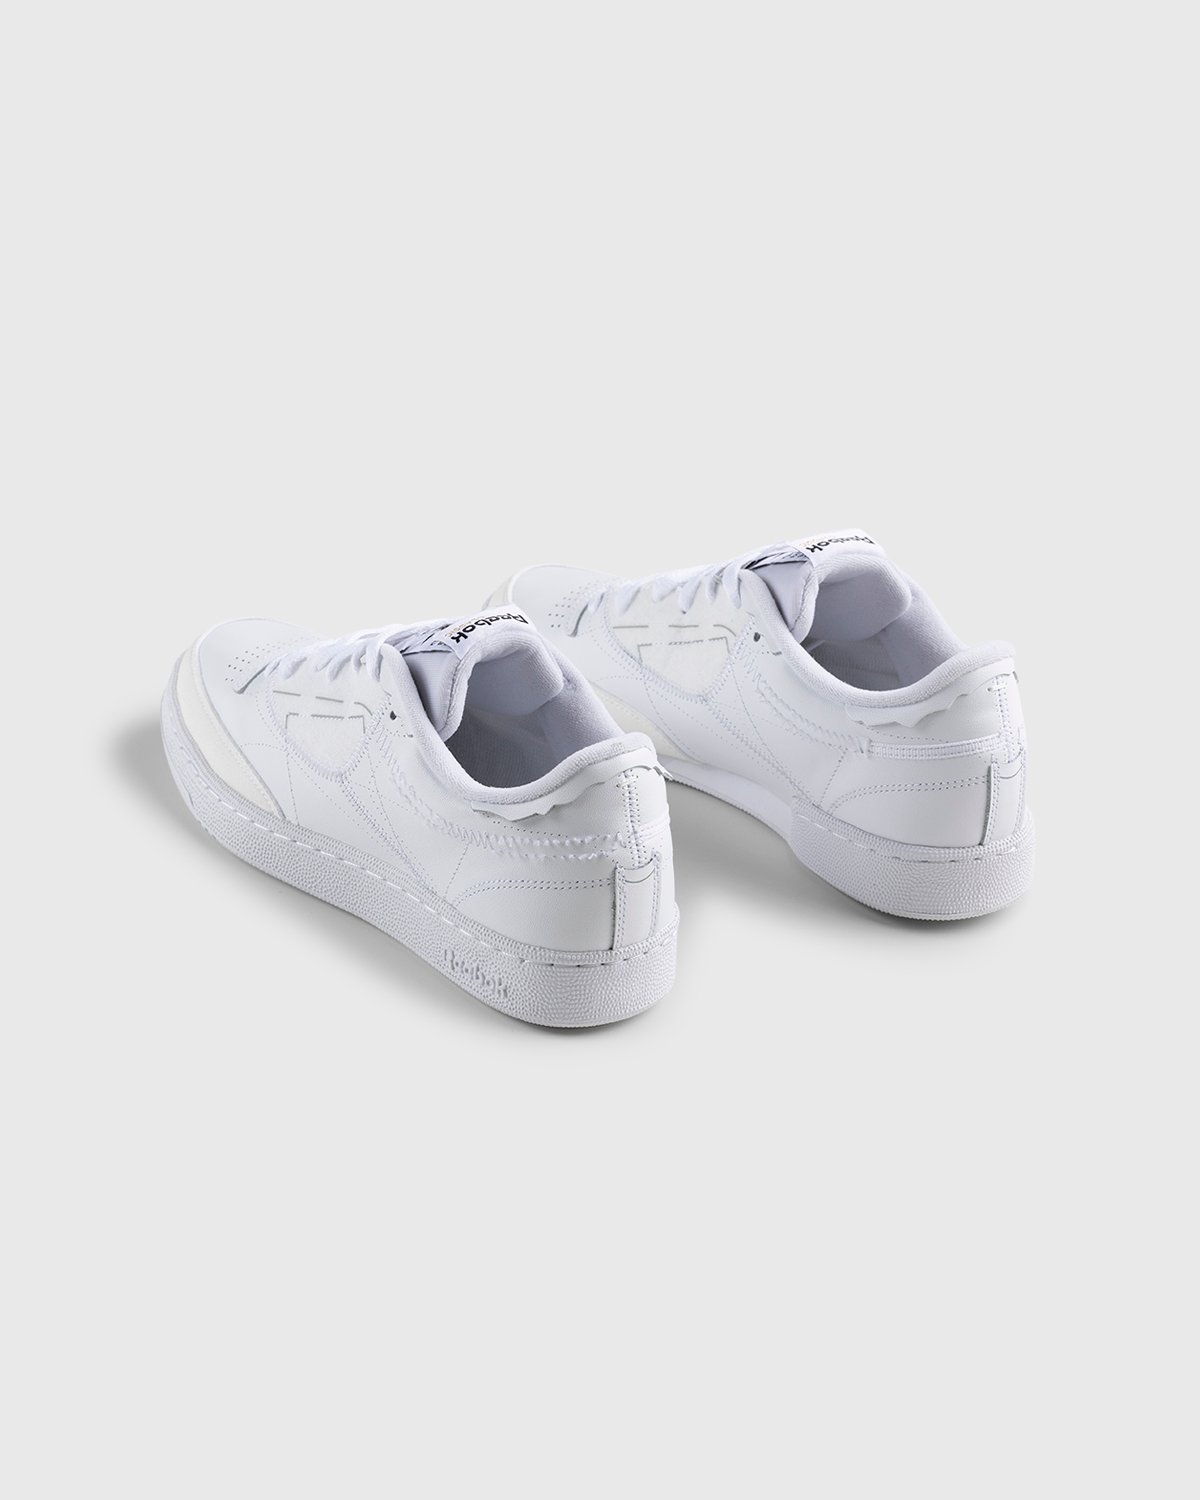 Maison Margiela x Reebok - Club C Memory Of Footwear White/Black/Footwear White - Footwear - White - Image 5